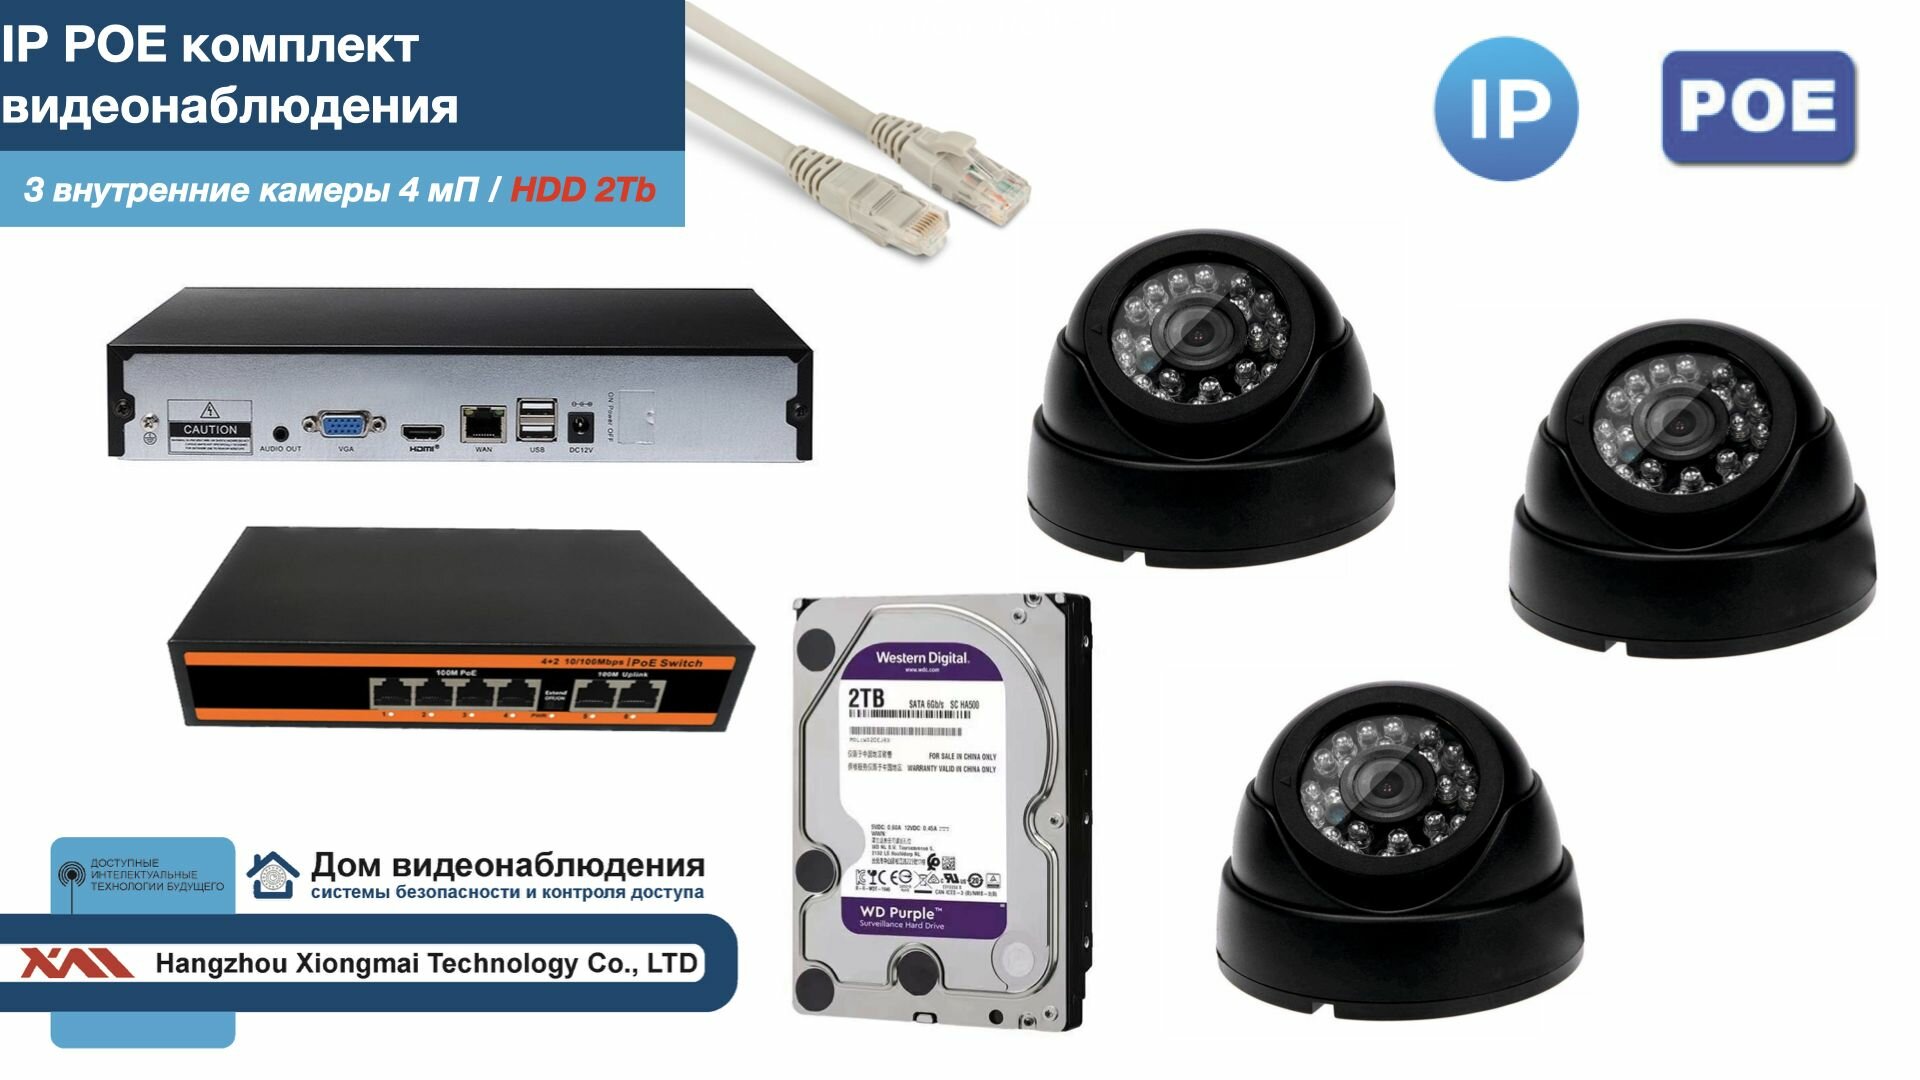 Полный IP POE комплект видеонаблюдения на 3 камеры (KIT3IPPOE300B4MP-HDD2Tb)